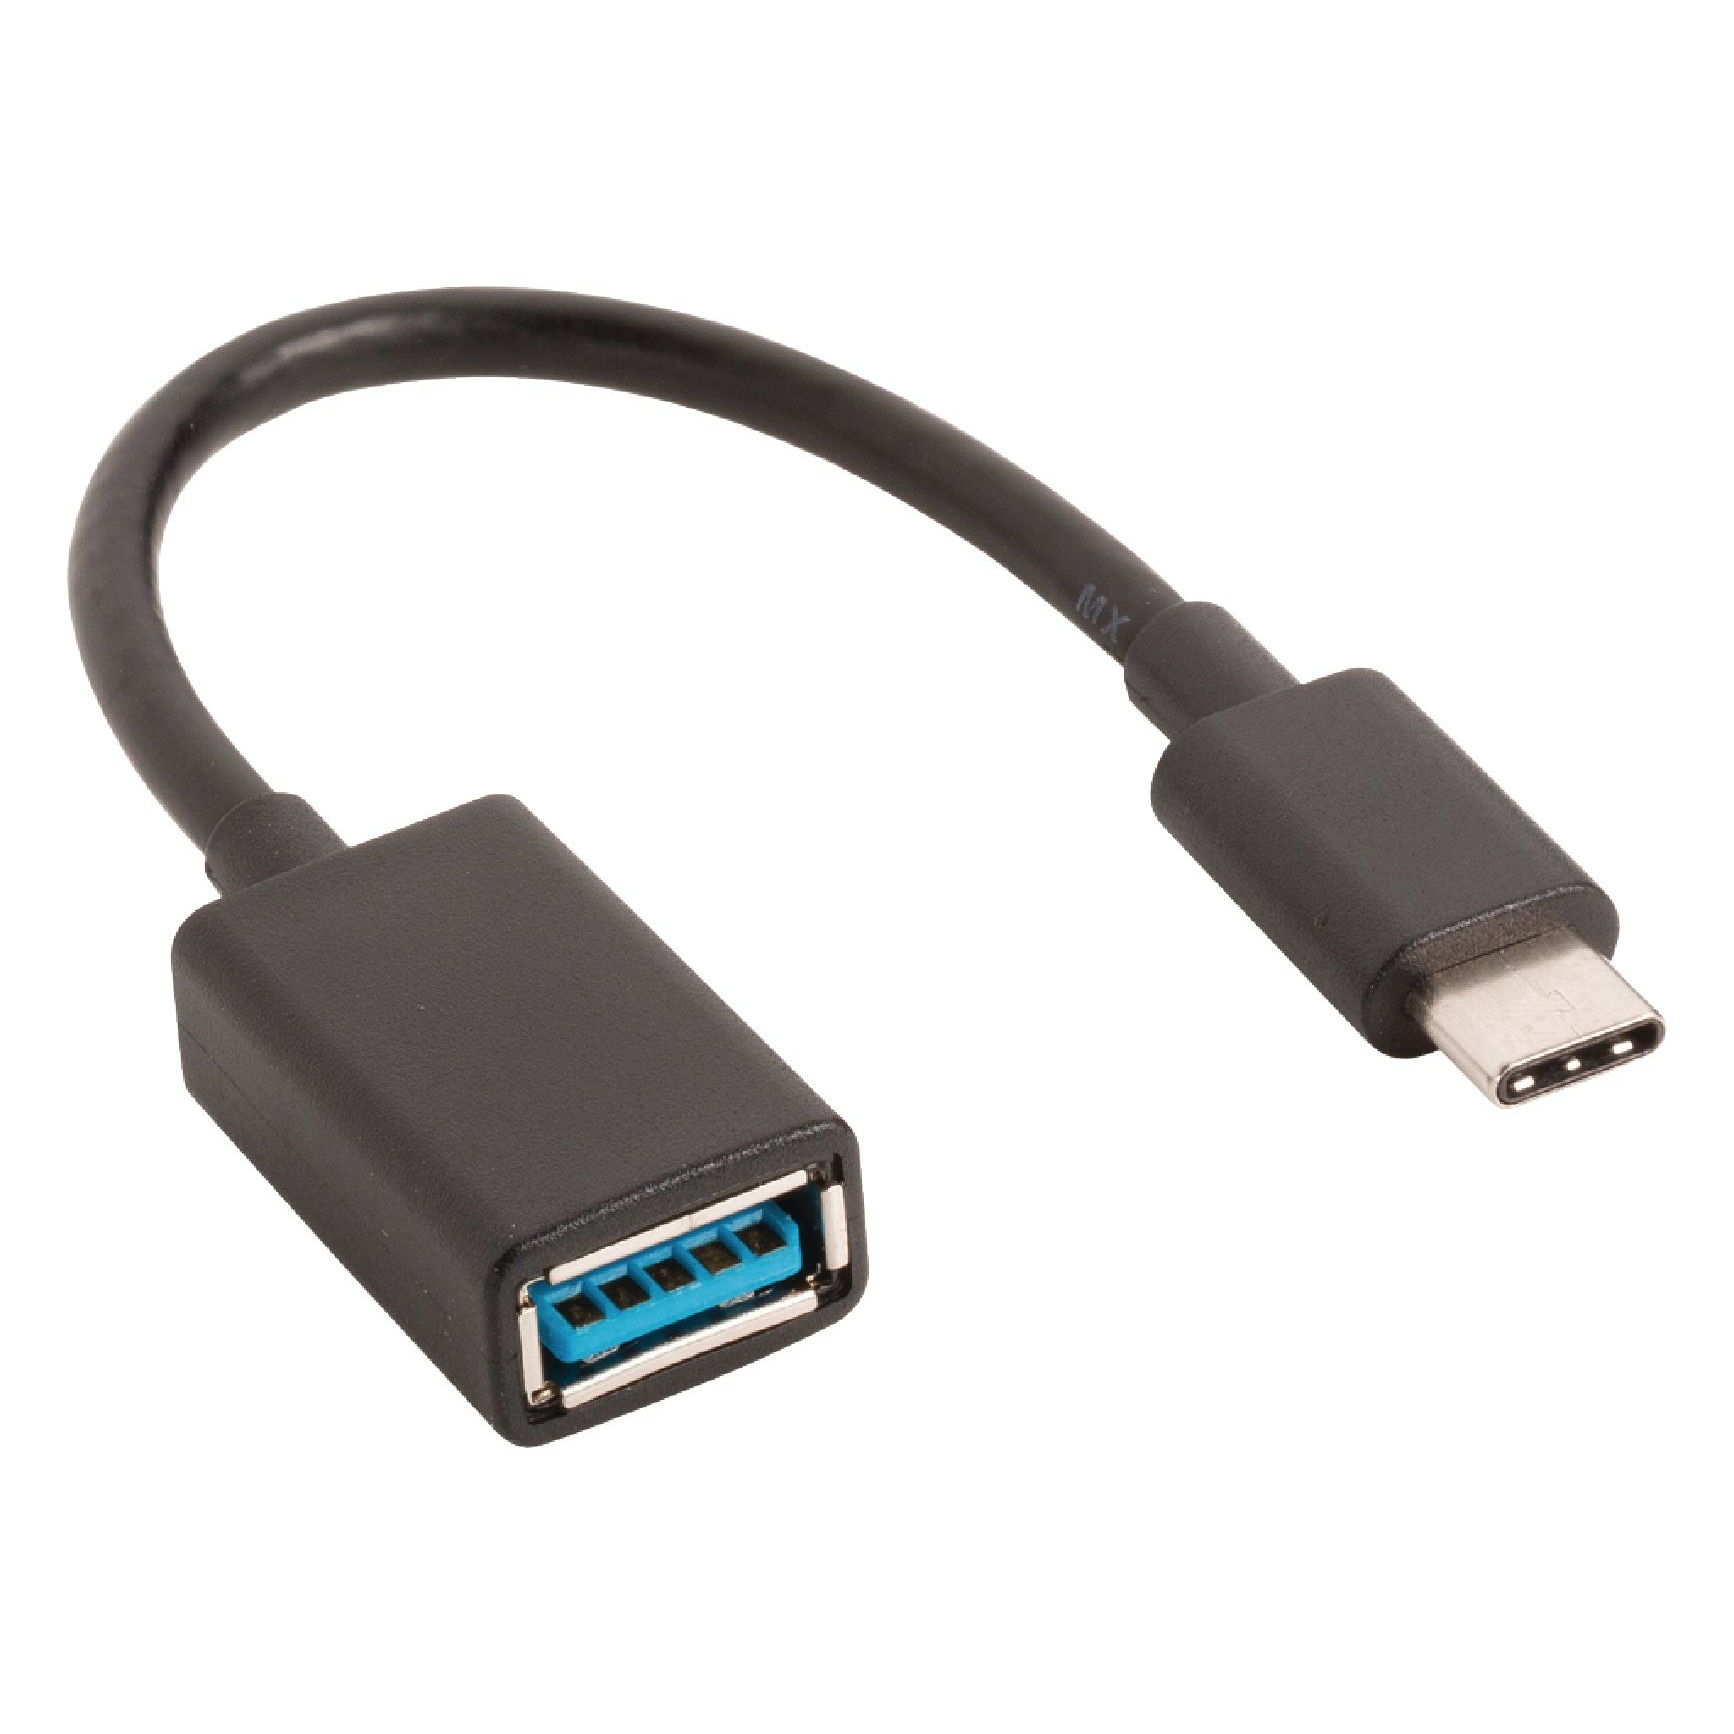 Usb vid 2c4e. Переходник HDMI USB 2.0 для телевизора. Переходник с HDMI И микро USB 3.0. Адаптер usb3 на HDMI для телевизора. Переходник HDMI под флешку USB.